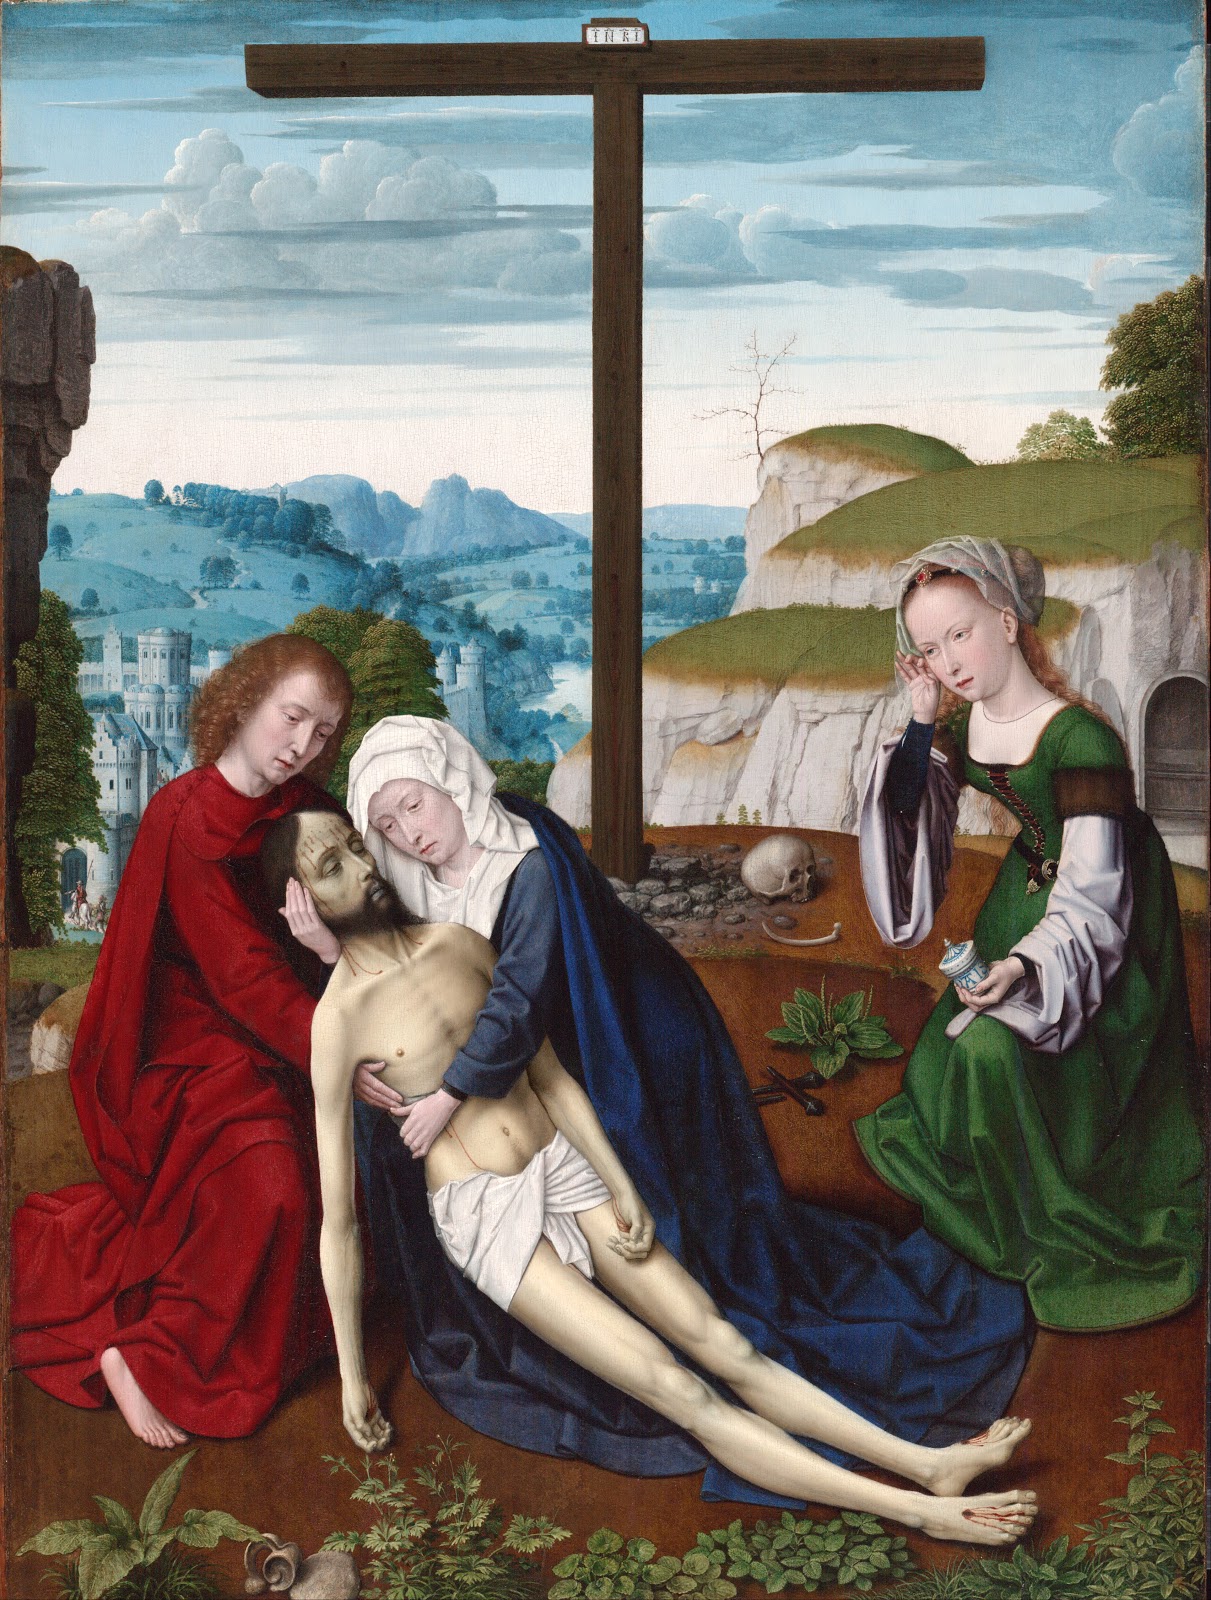 Gerard+David-1460-1523 (14).jpg